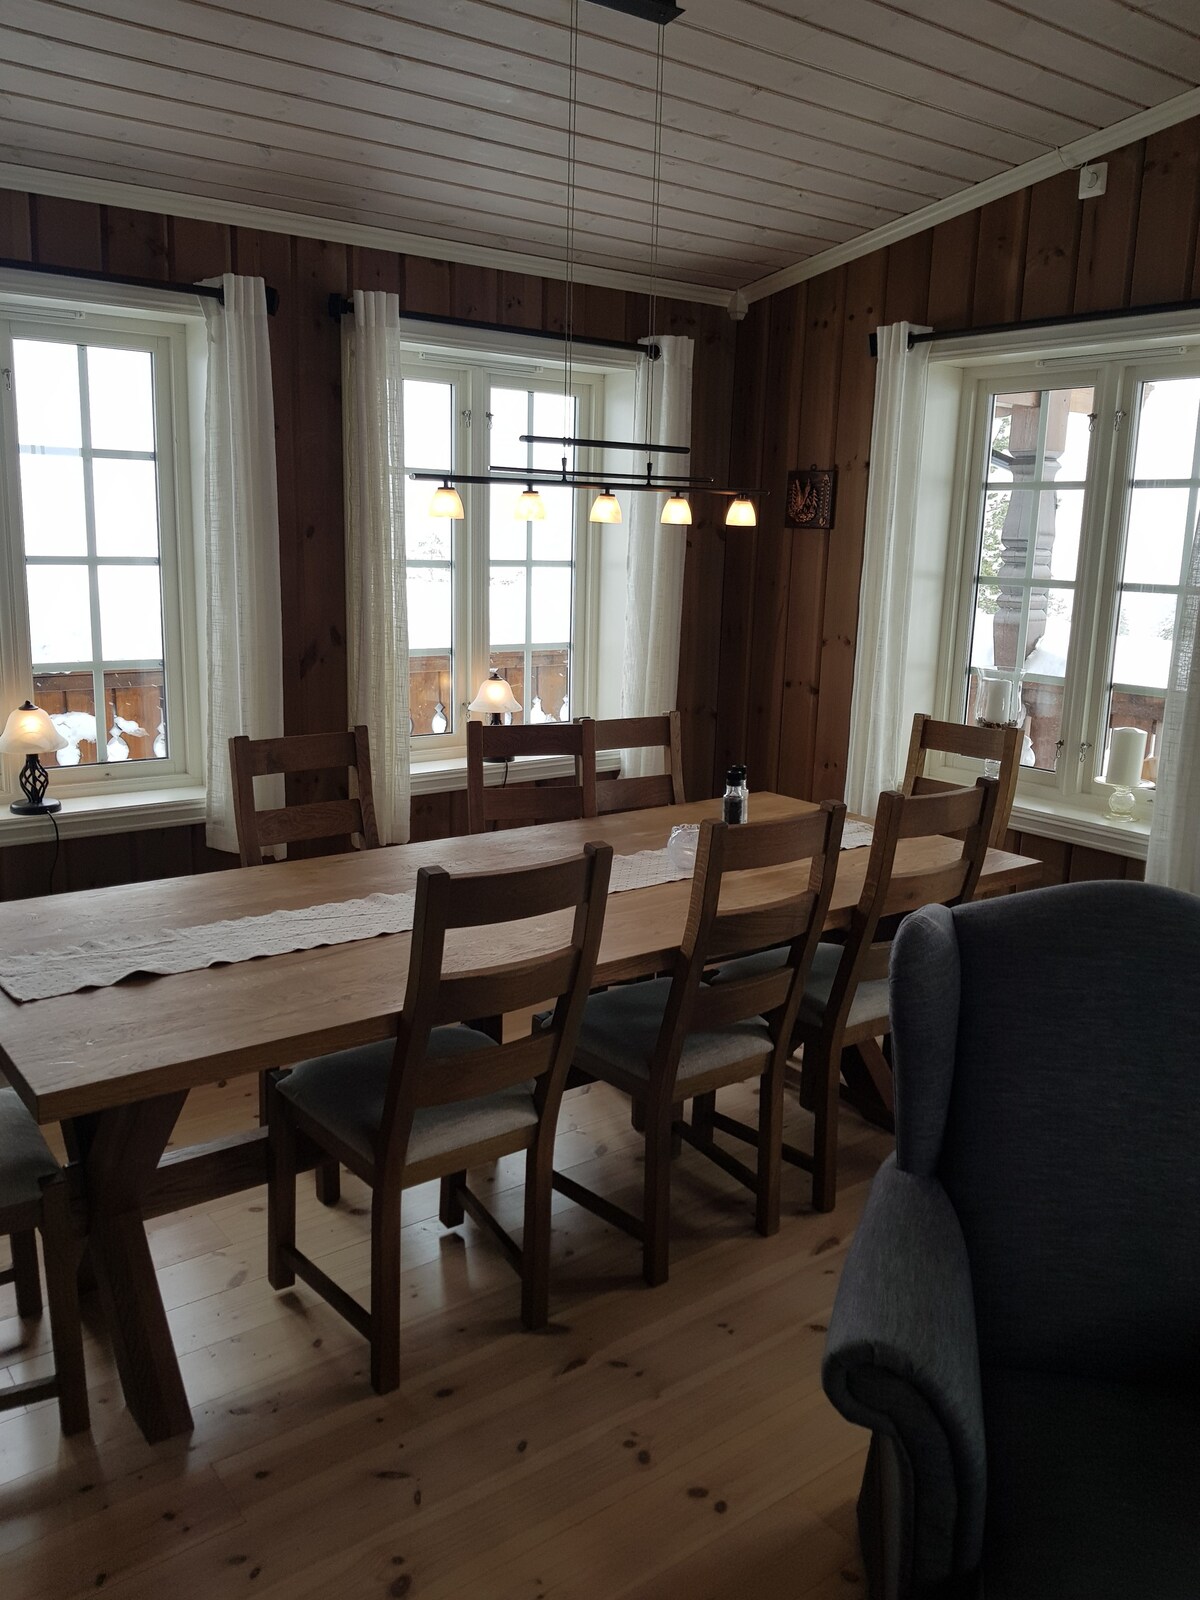 Blefjell的大型舒适家庭小木屋